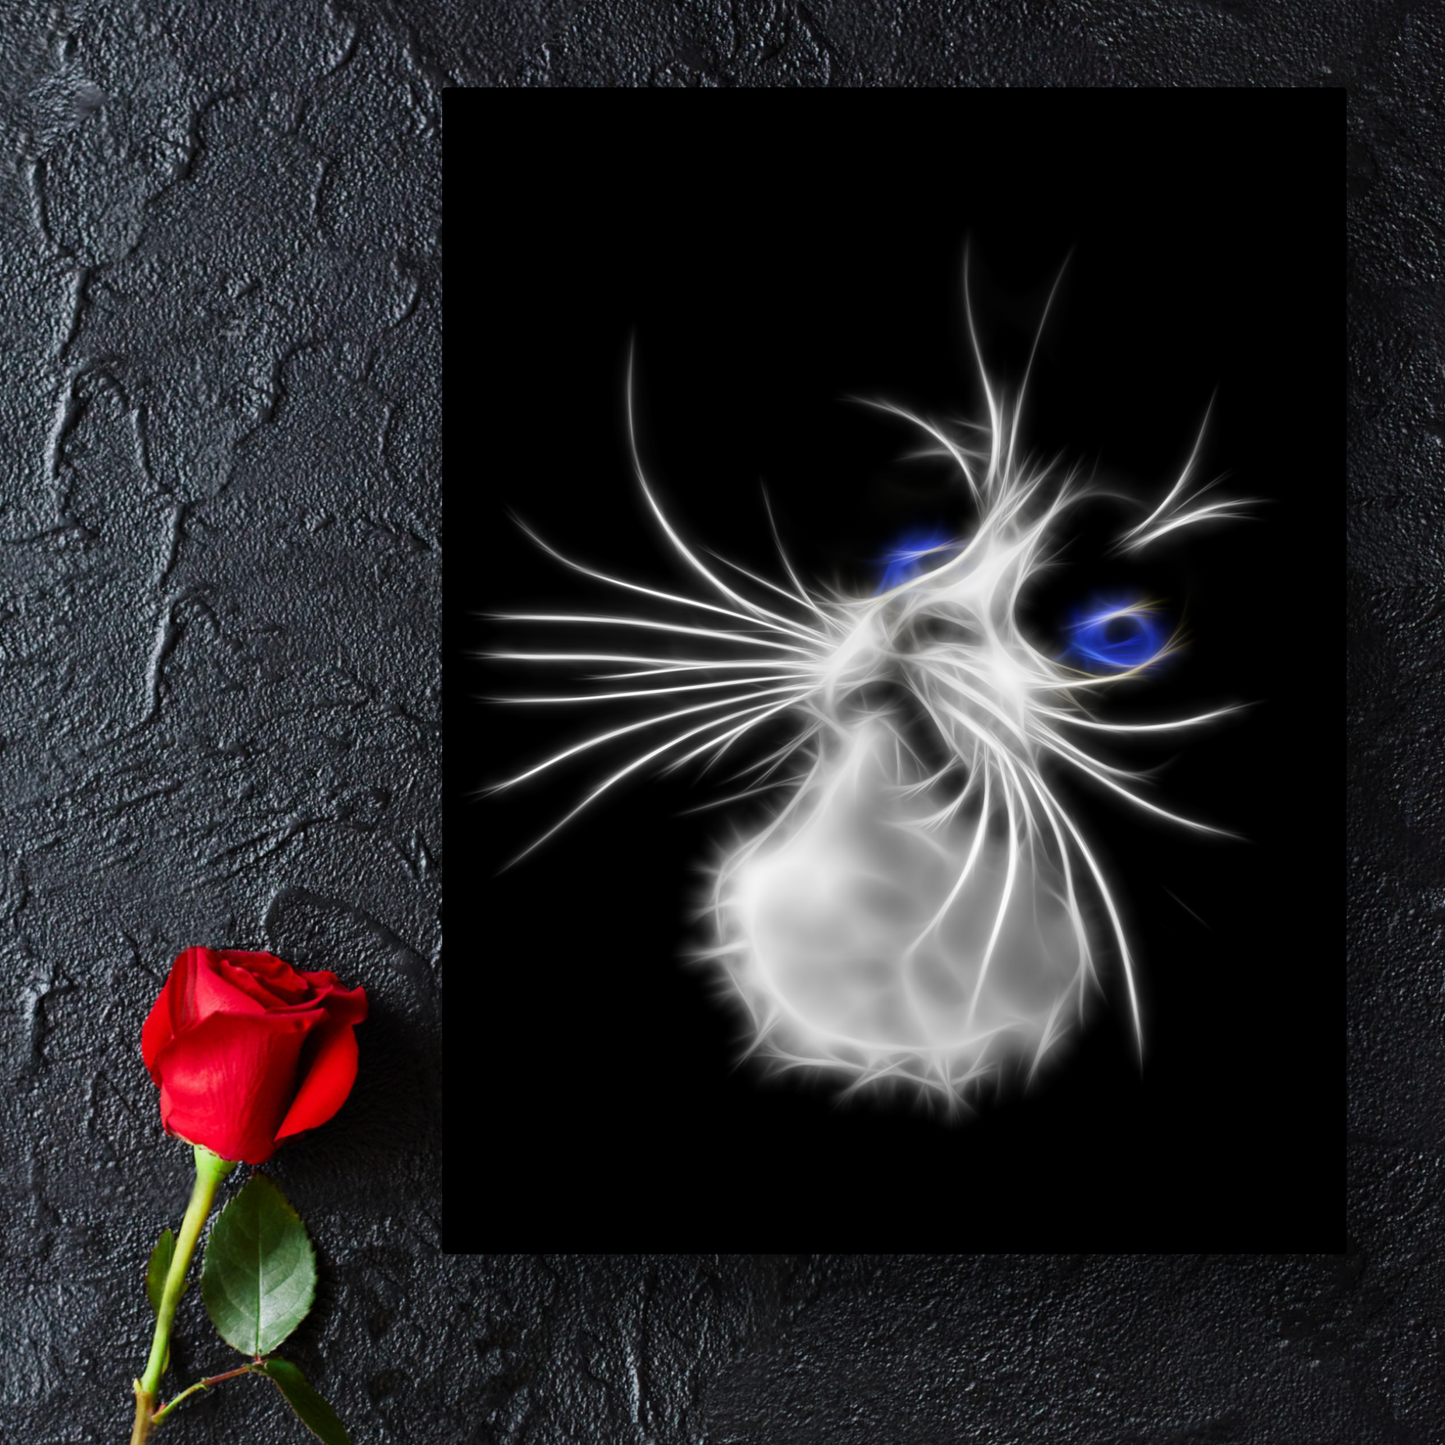 Blue Eye Tuxedo Cat Aluminium Metal Wall Plaque